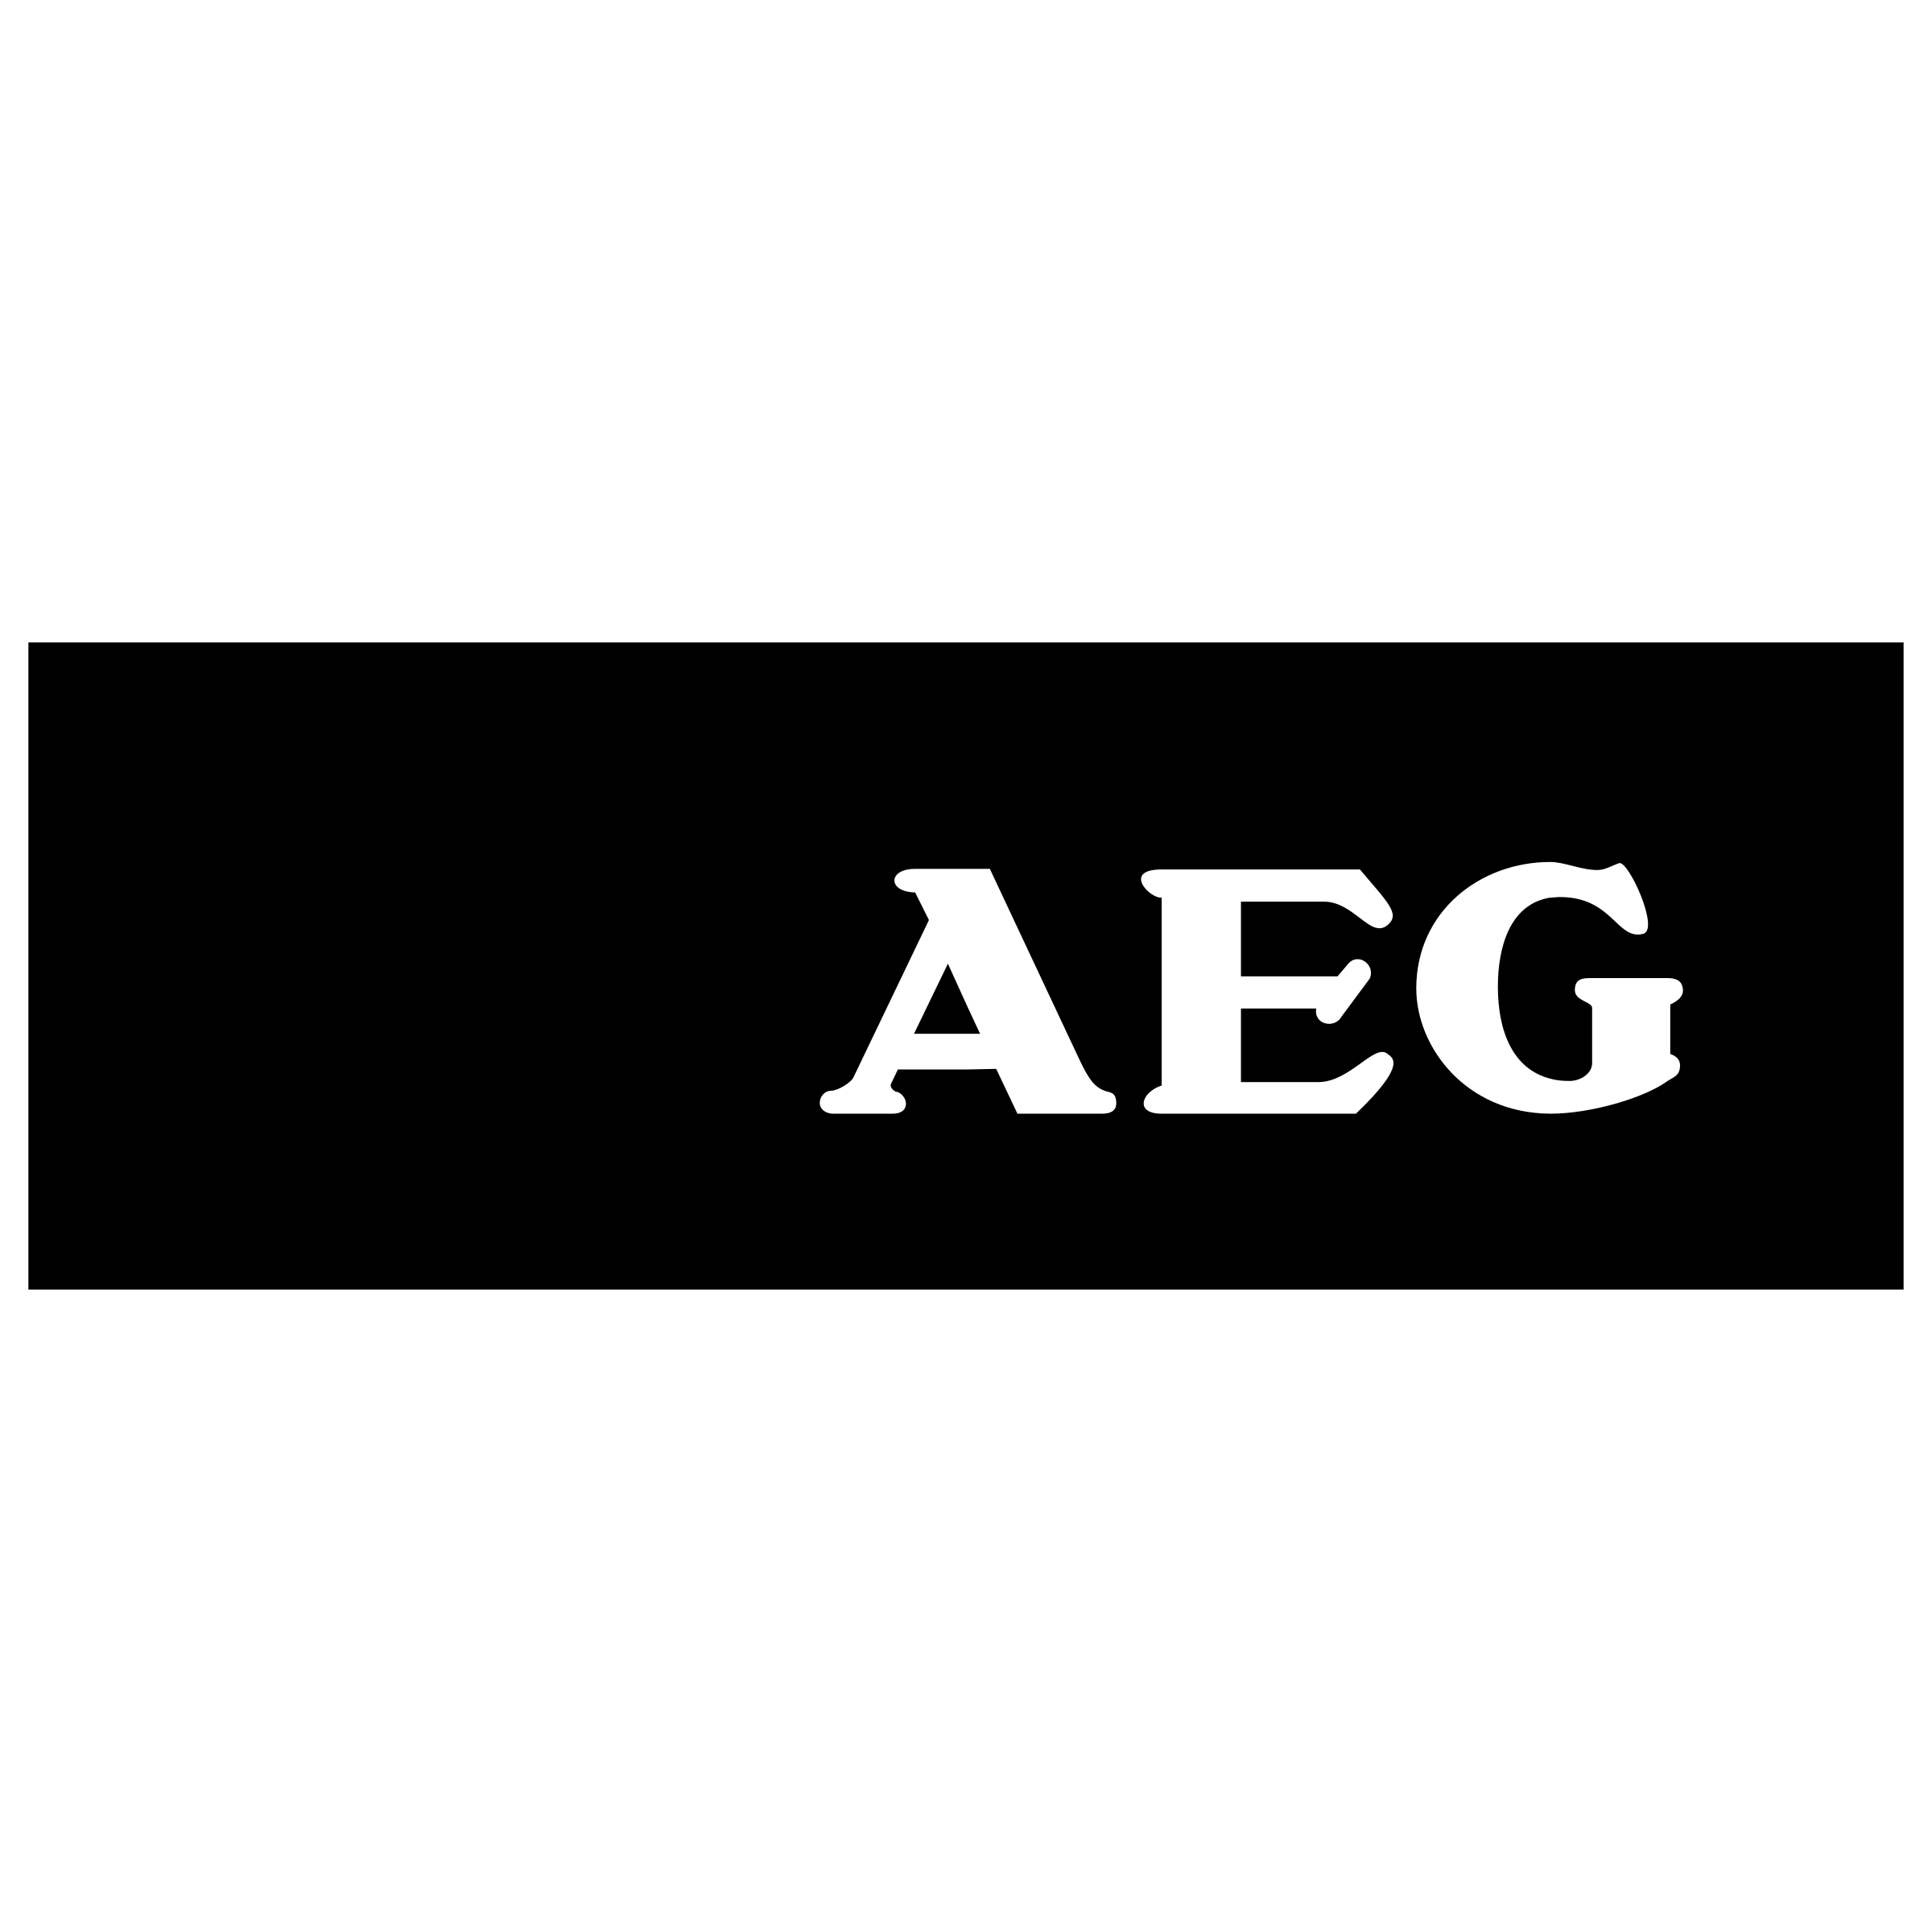 AEG Logo - AEG Logo PNG Transparent & SVG Vector - Freebie Supply